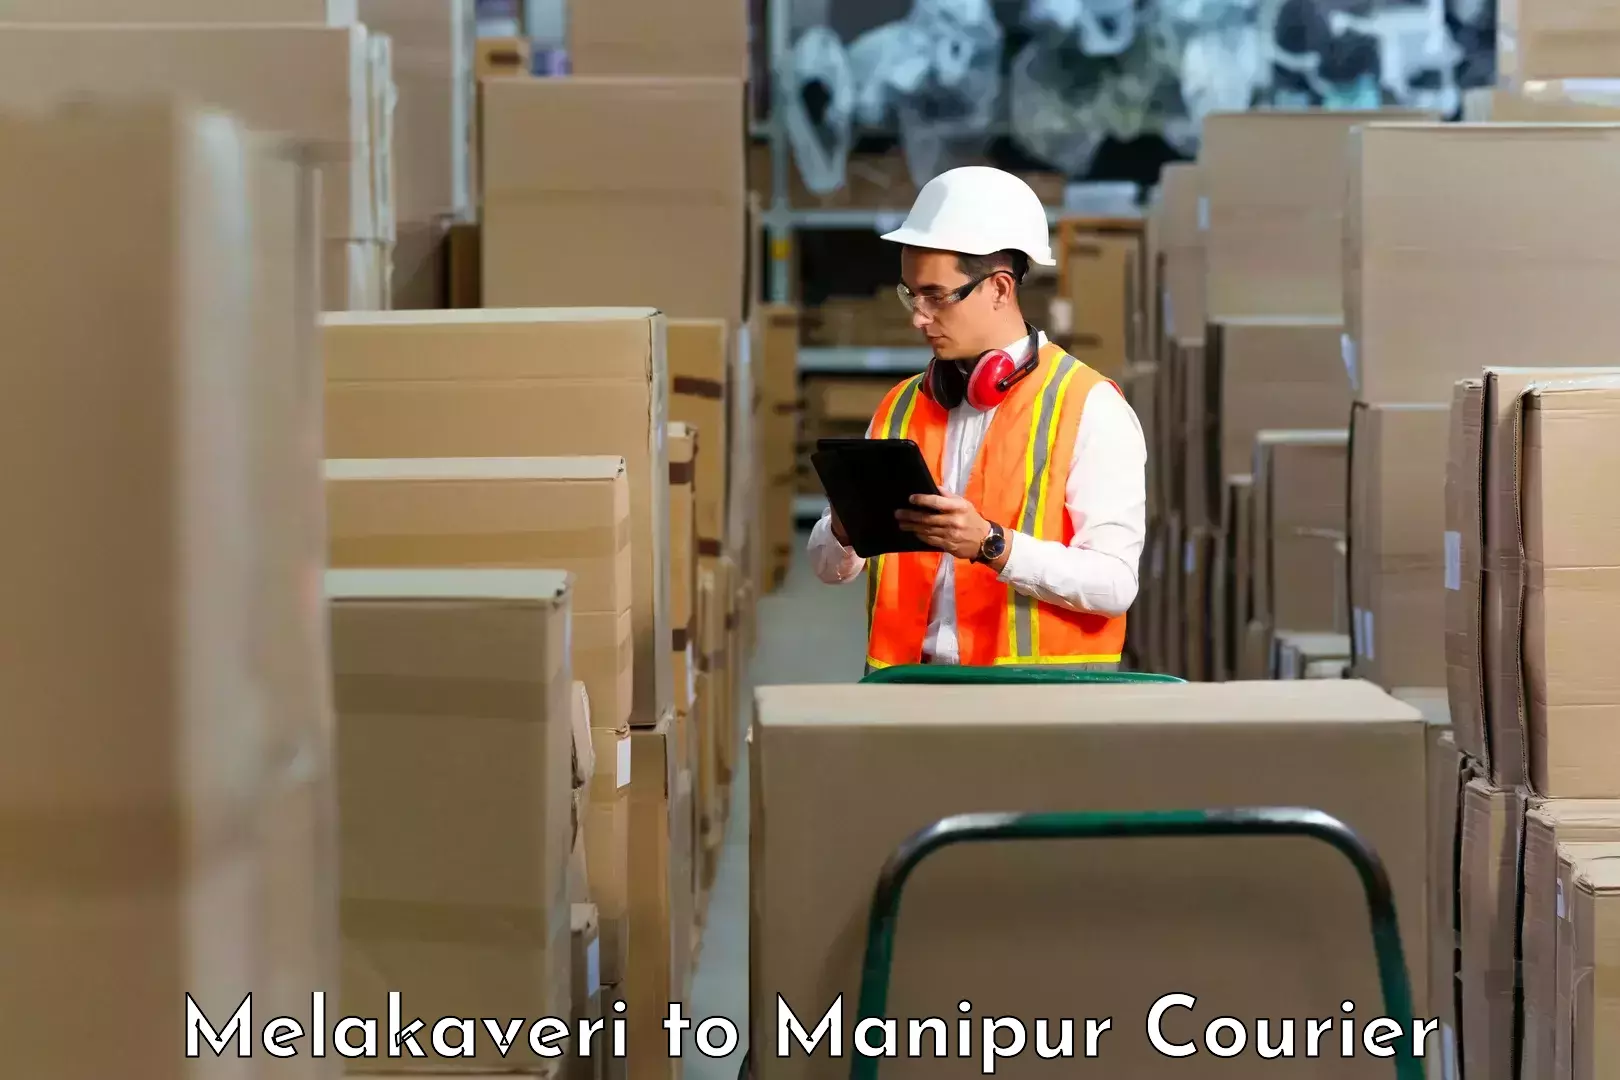 Courier service comparison Melakaveri to Manipur